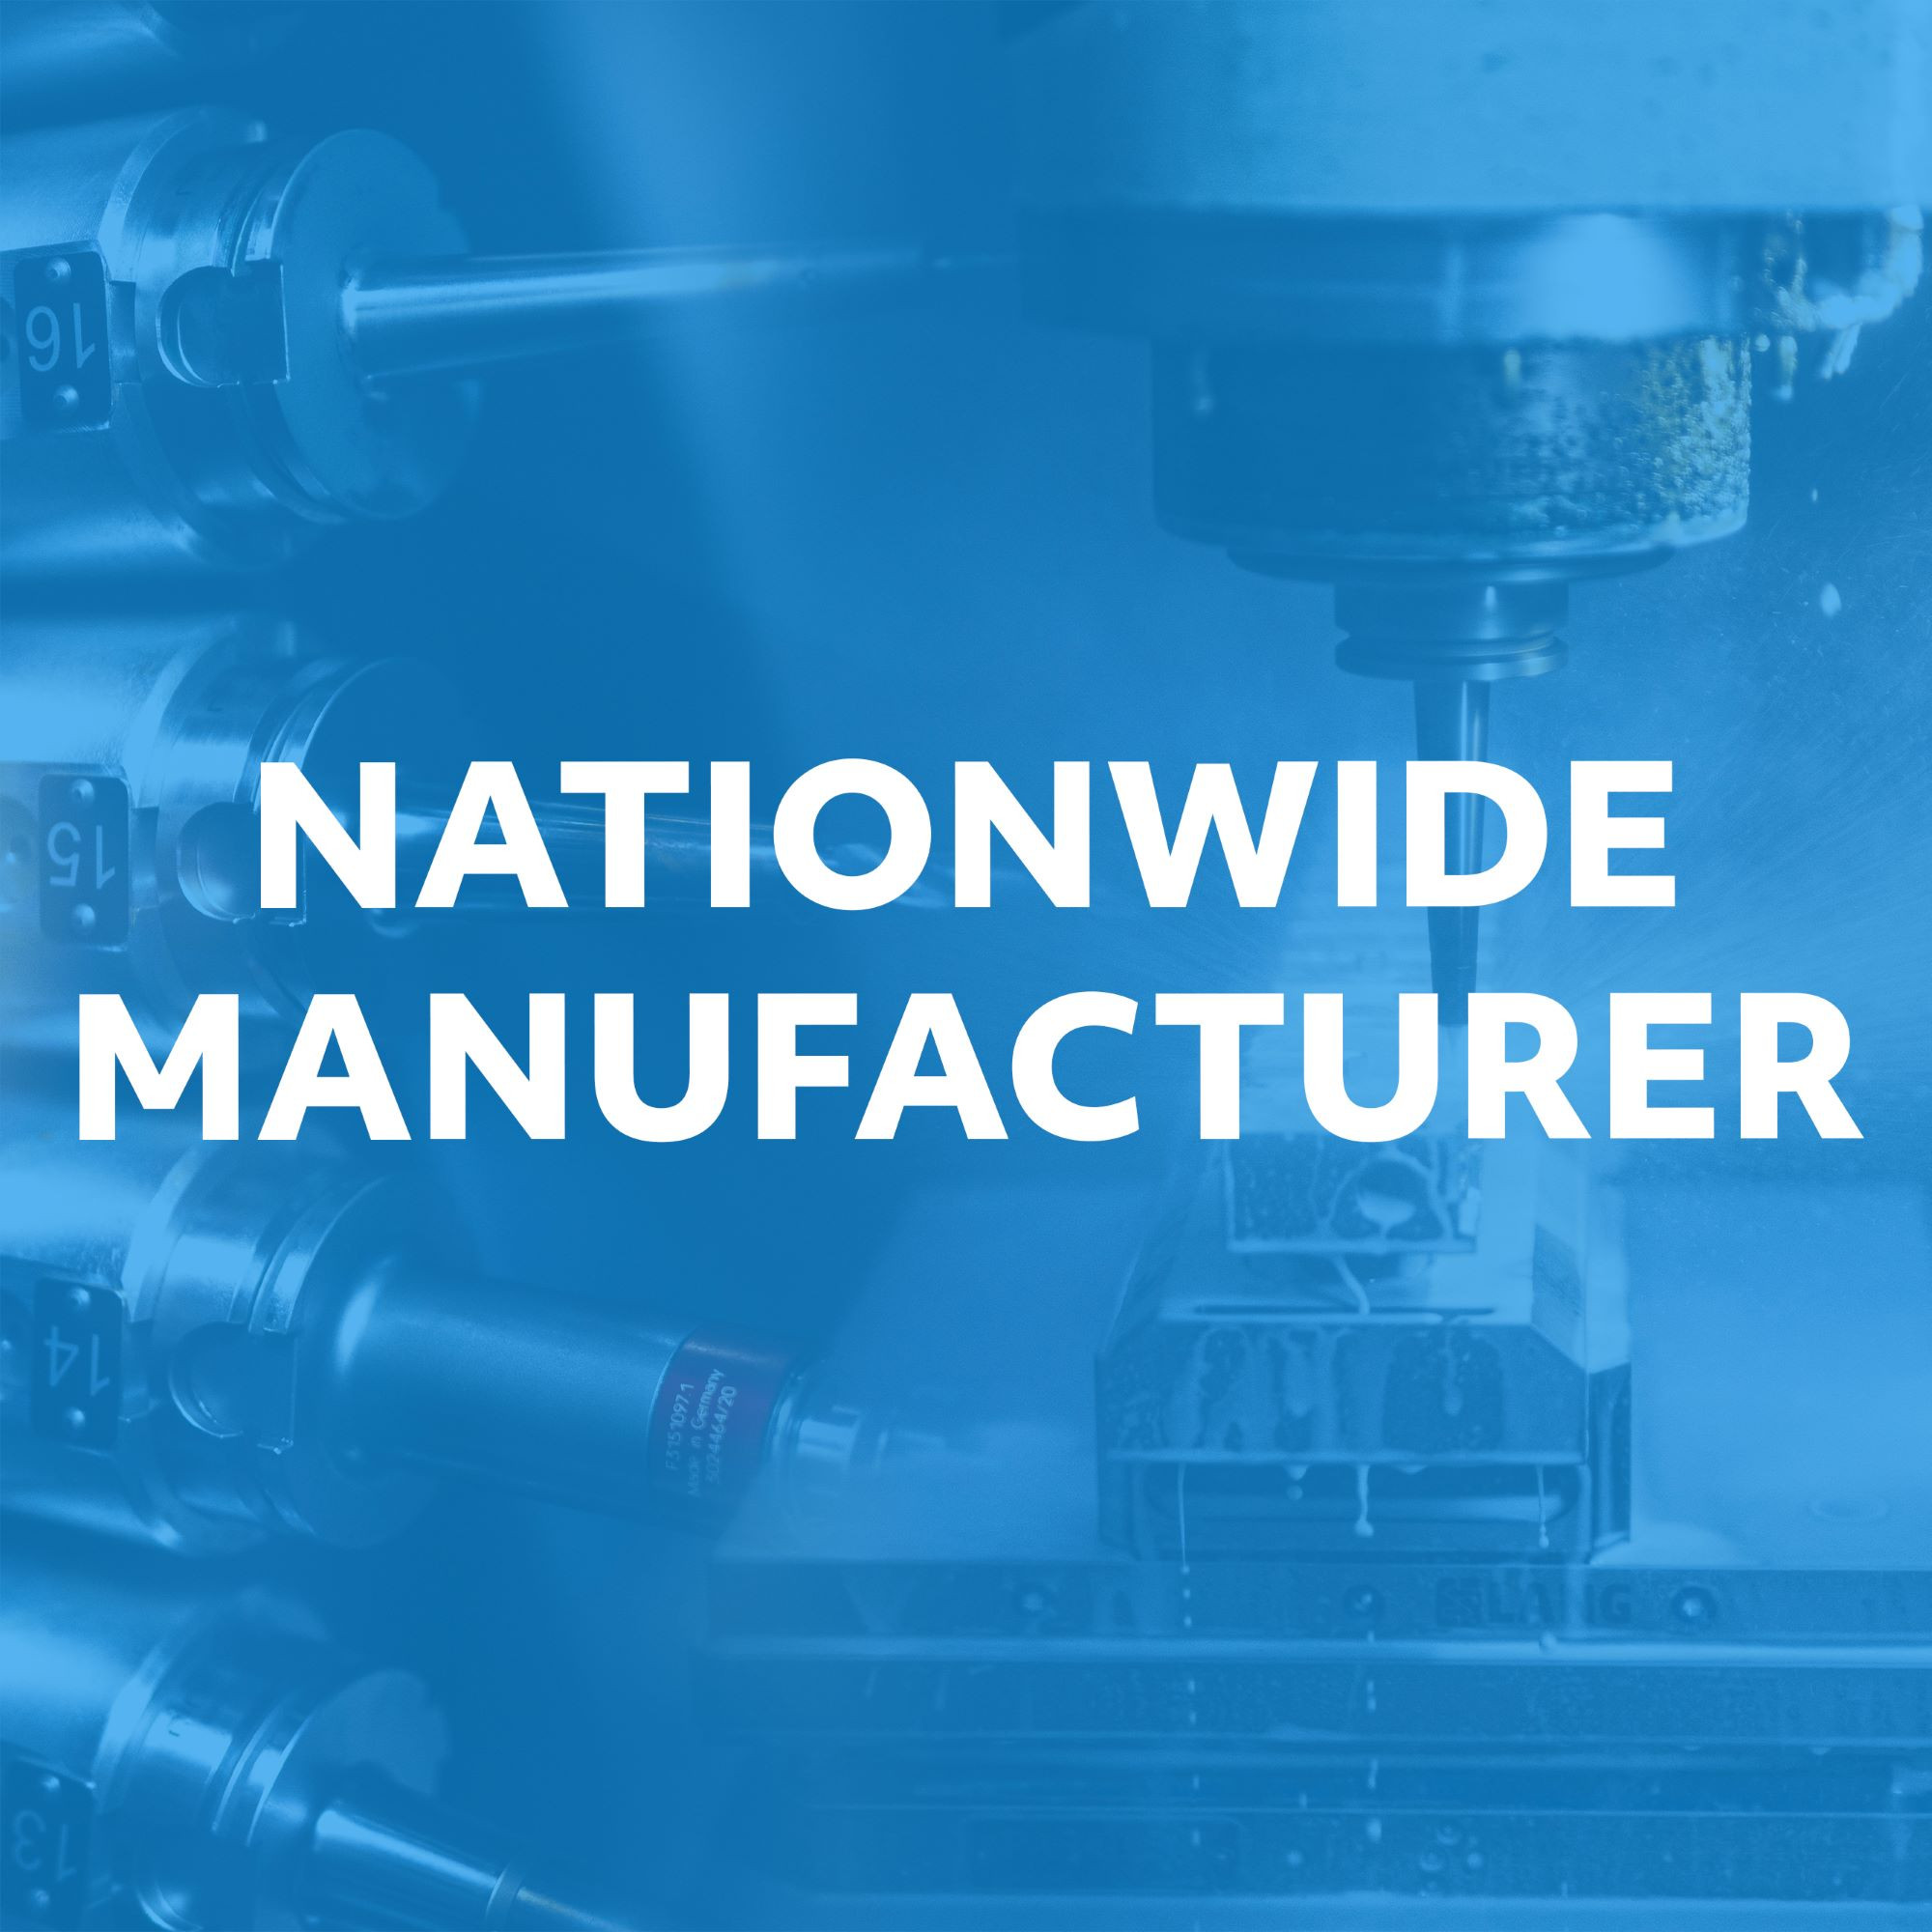 Manufacturing #001 - Nationwide Manufacturer